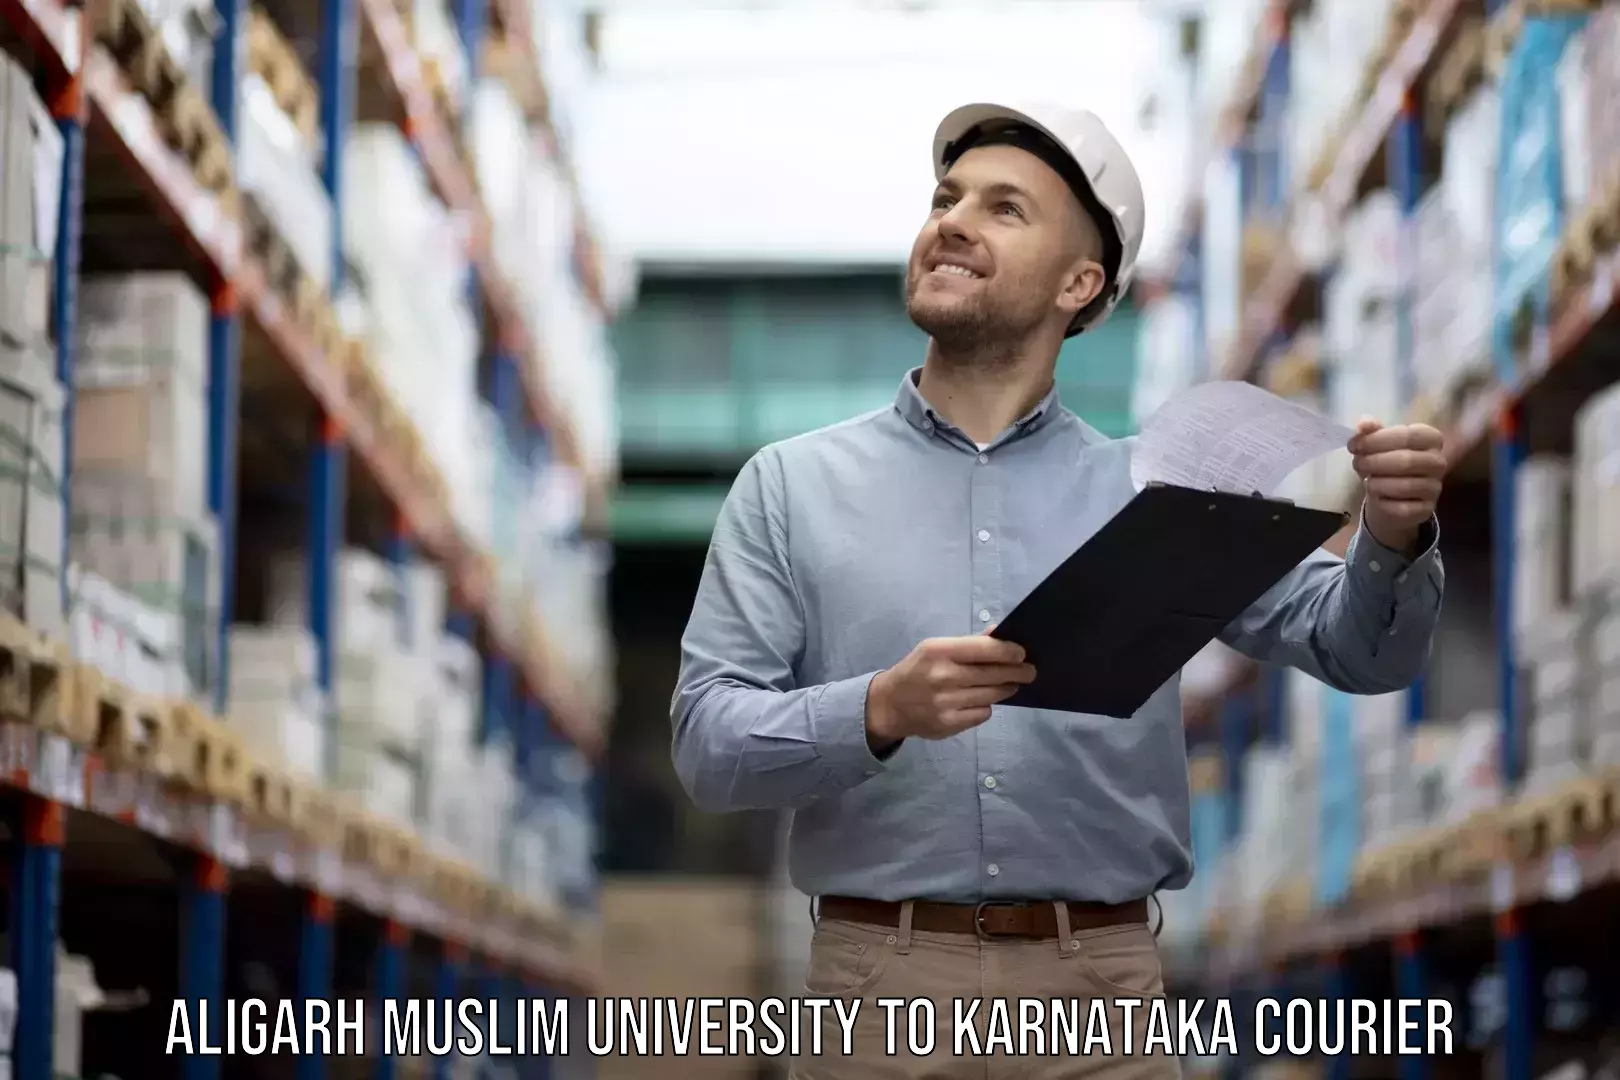 Personalized moving service Aligarh Muslim University to Kanjarakatte